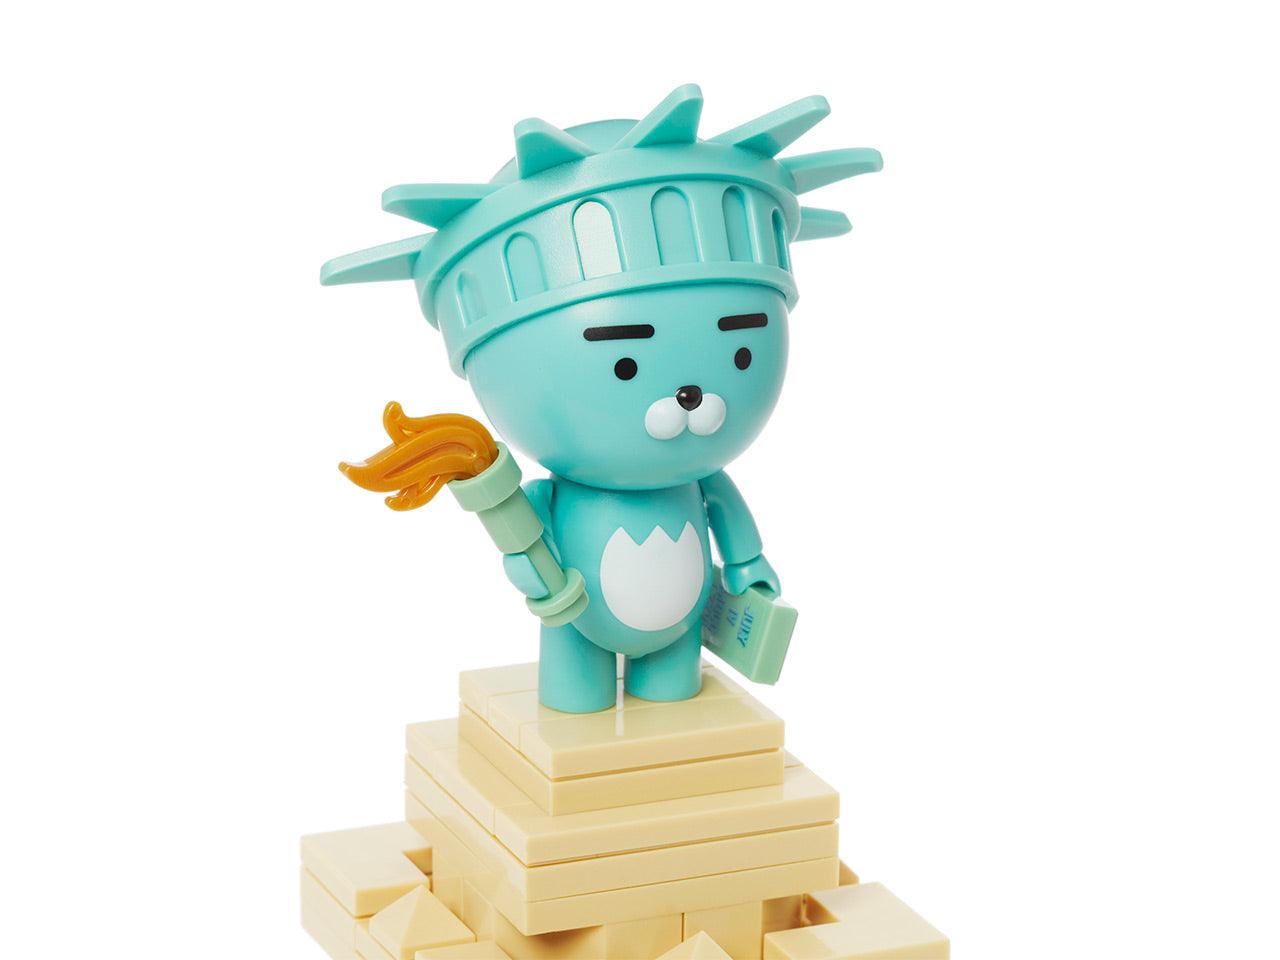 Kakao Friends Ryan Landmark Brick Figure 自由女神像模型 - SOUL SIMPLE HK